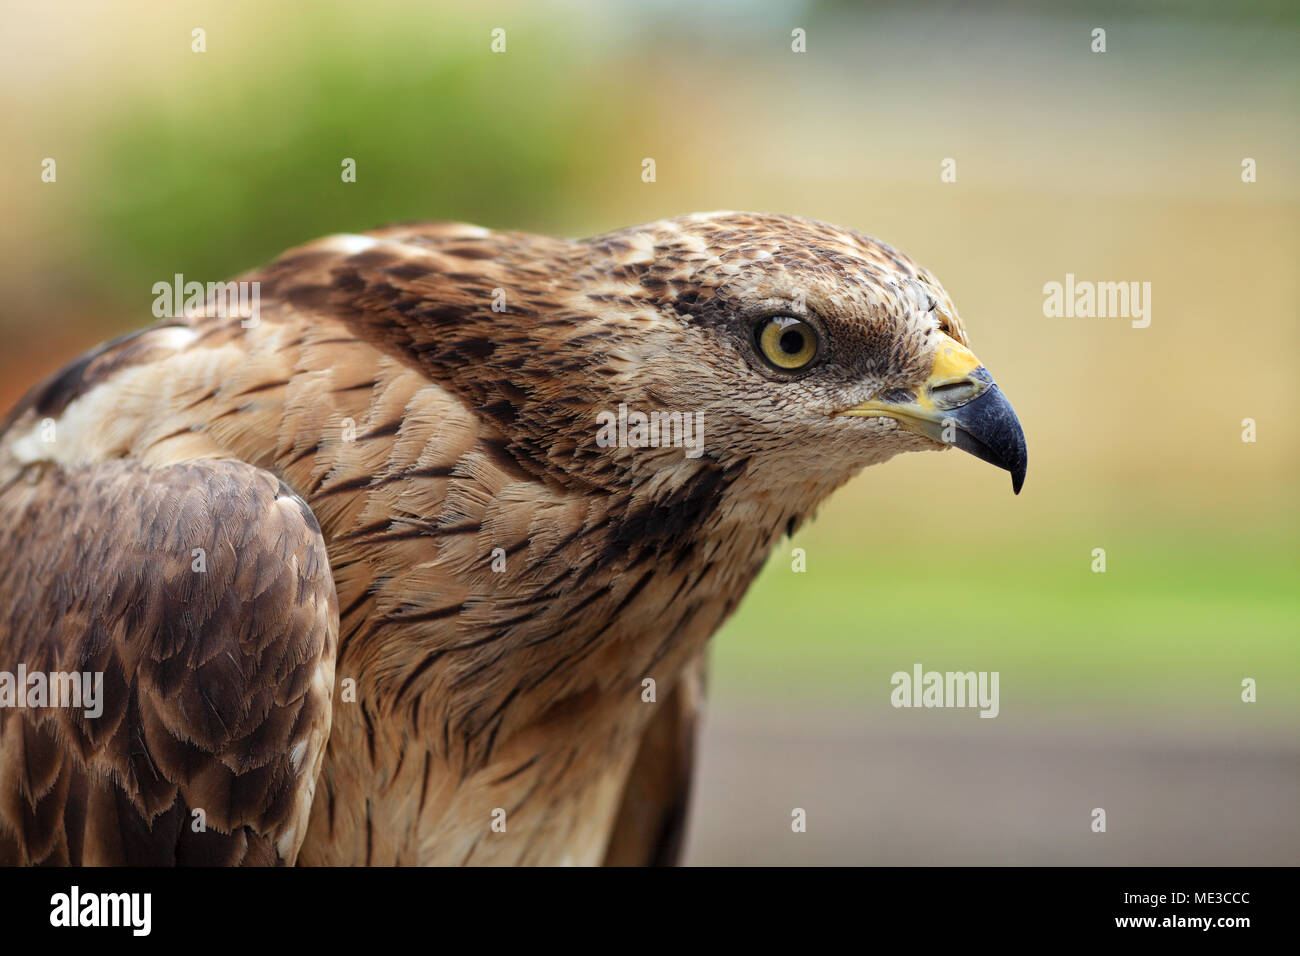 Close up portrait of an Eagle hawk Stock Photo